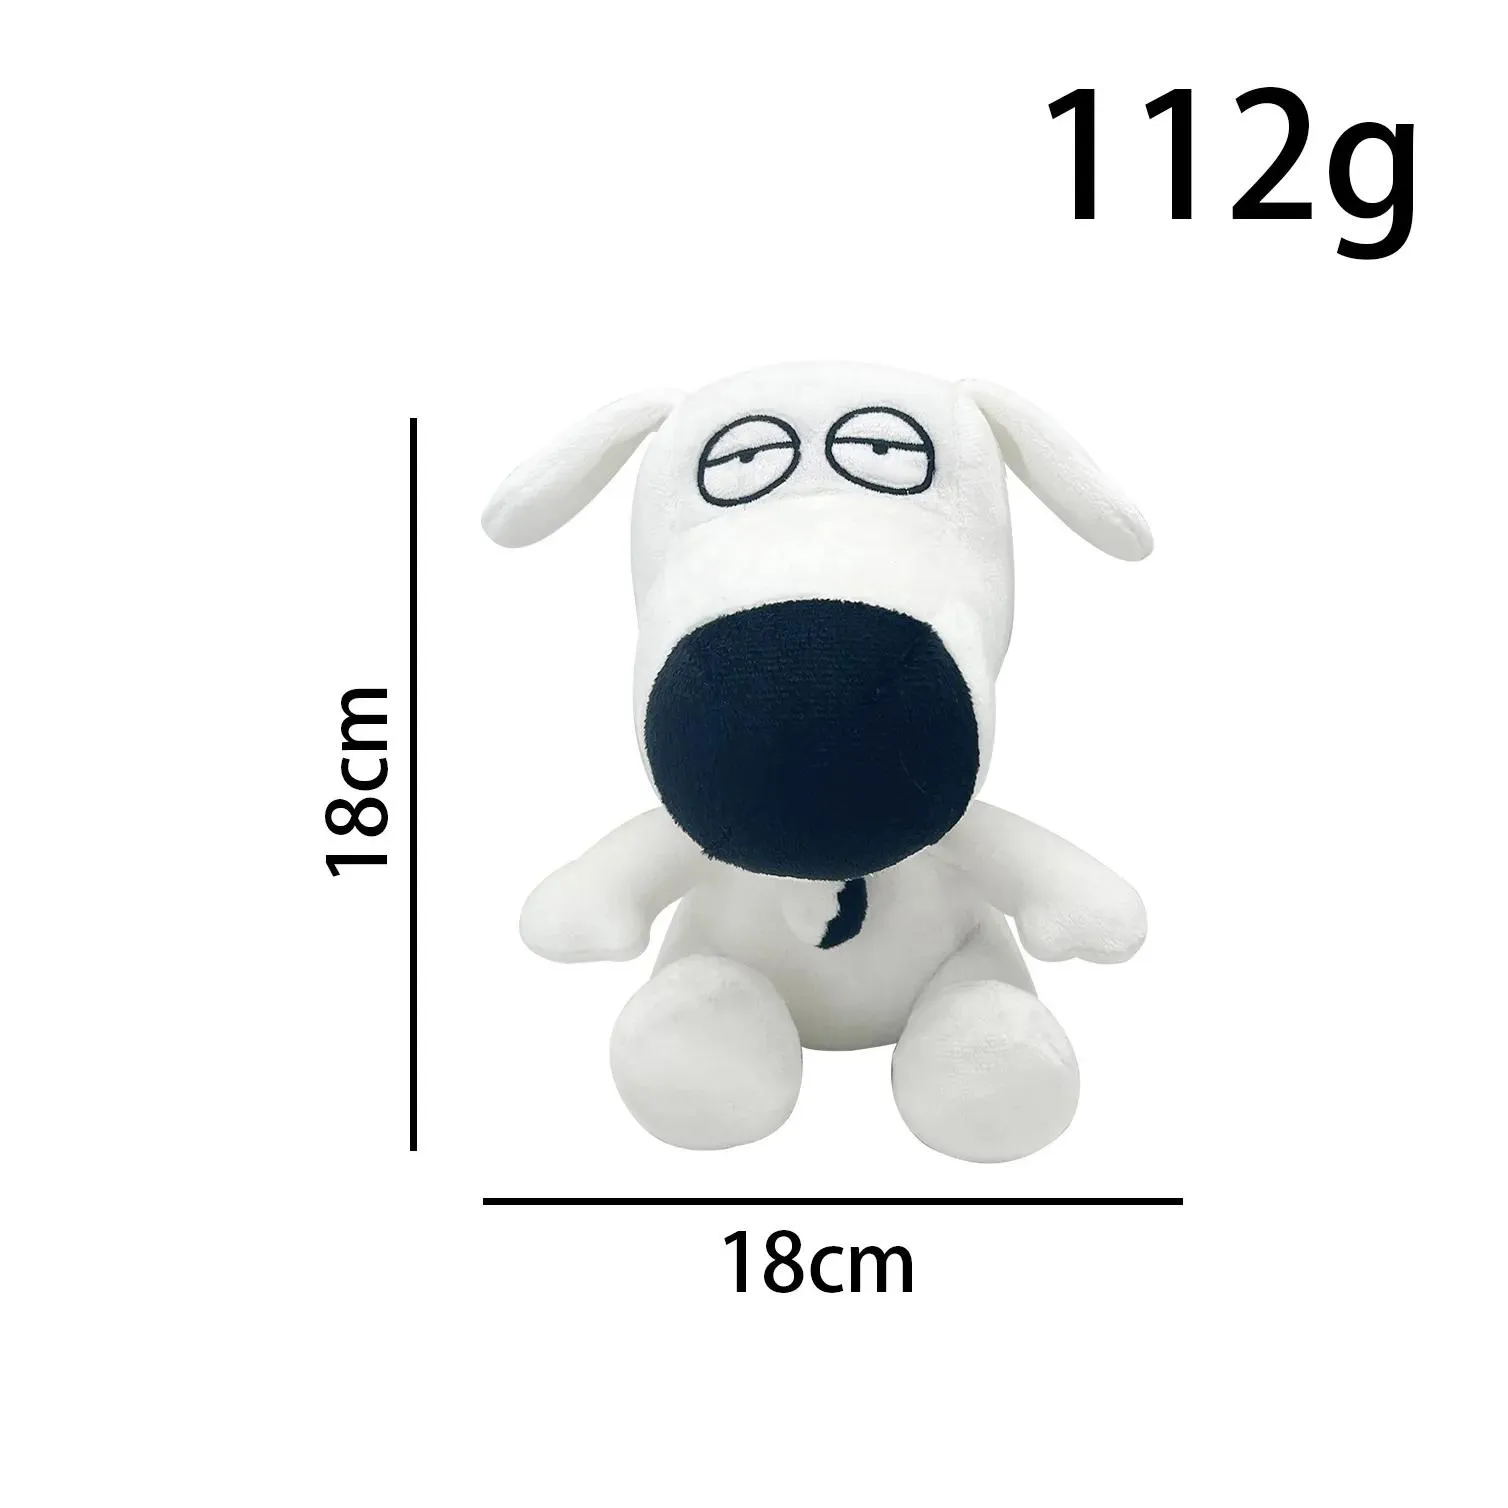 YORTOOB Family Guy Plush Toys Cartoon Characters Stuffed Animals